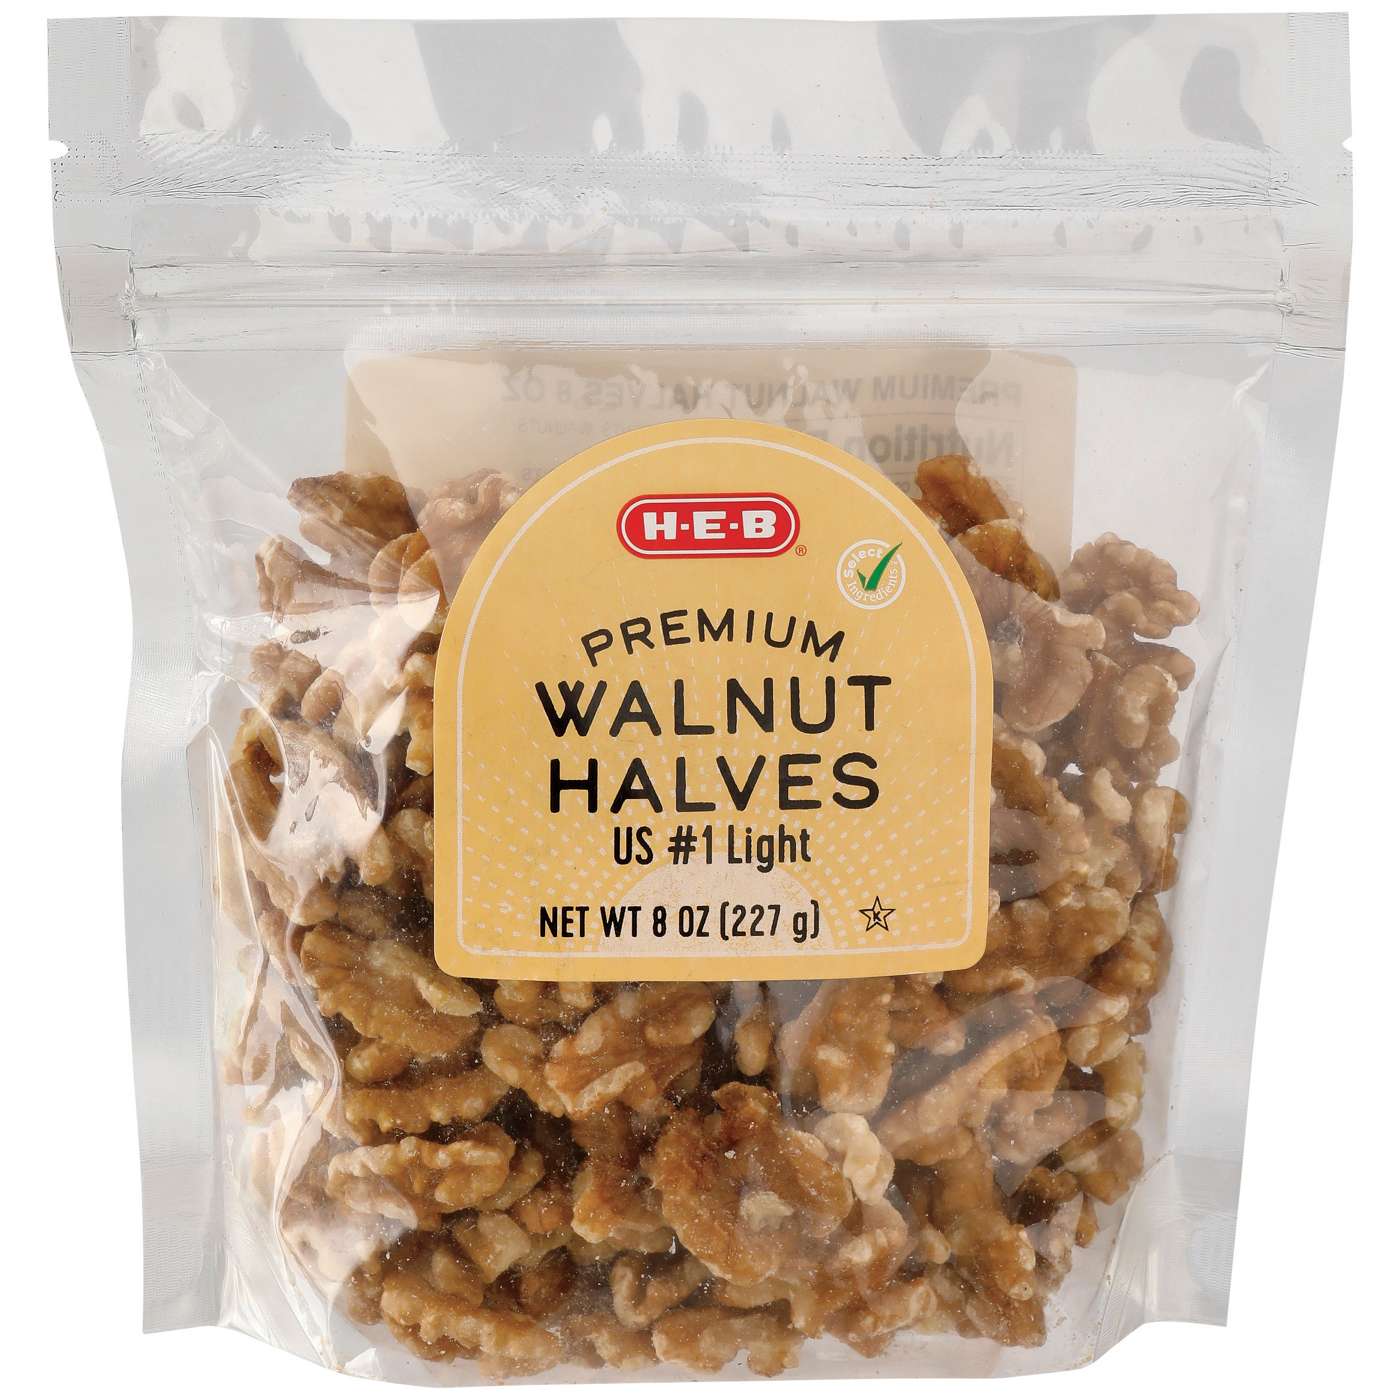 H-E-B Premium Walnut Halves; image 1 of 2